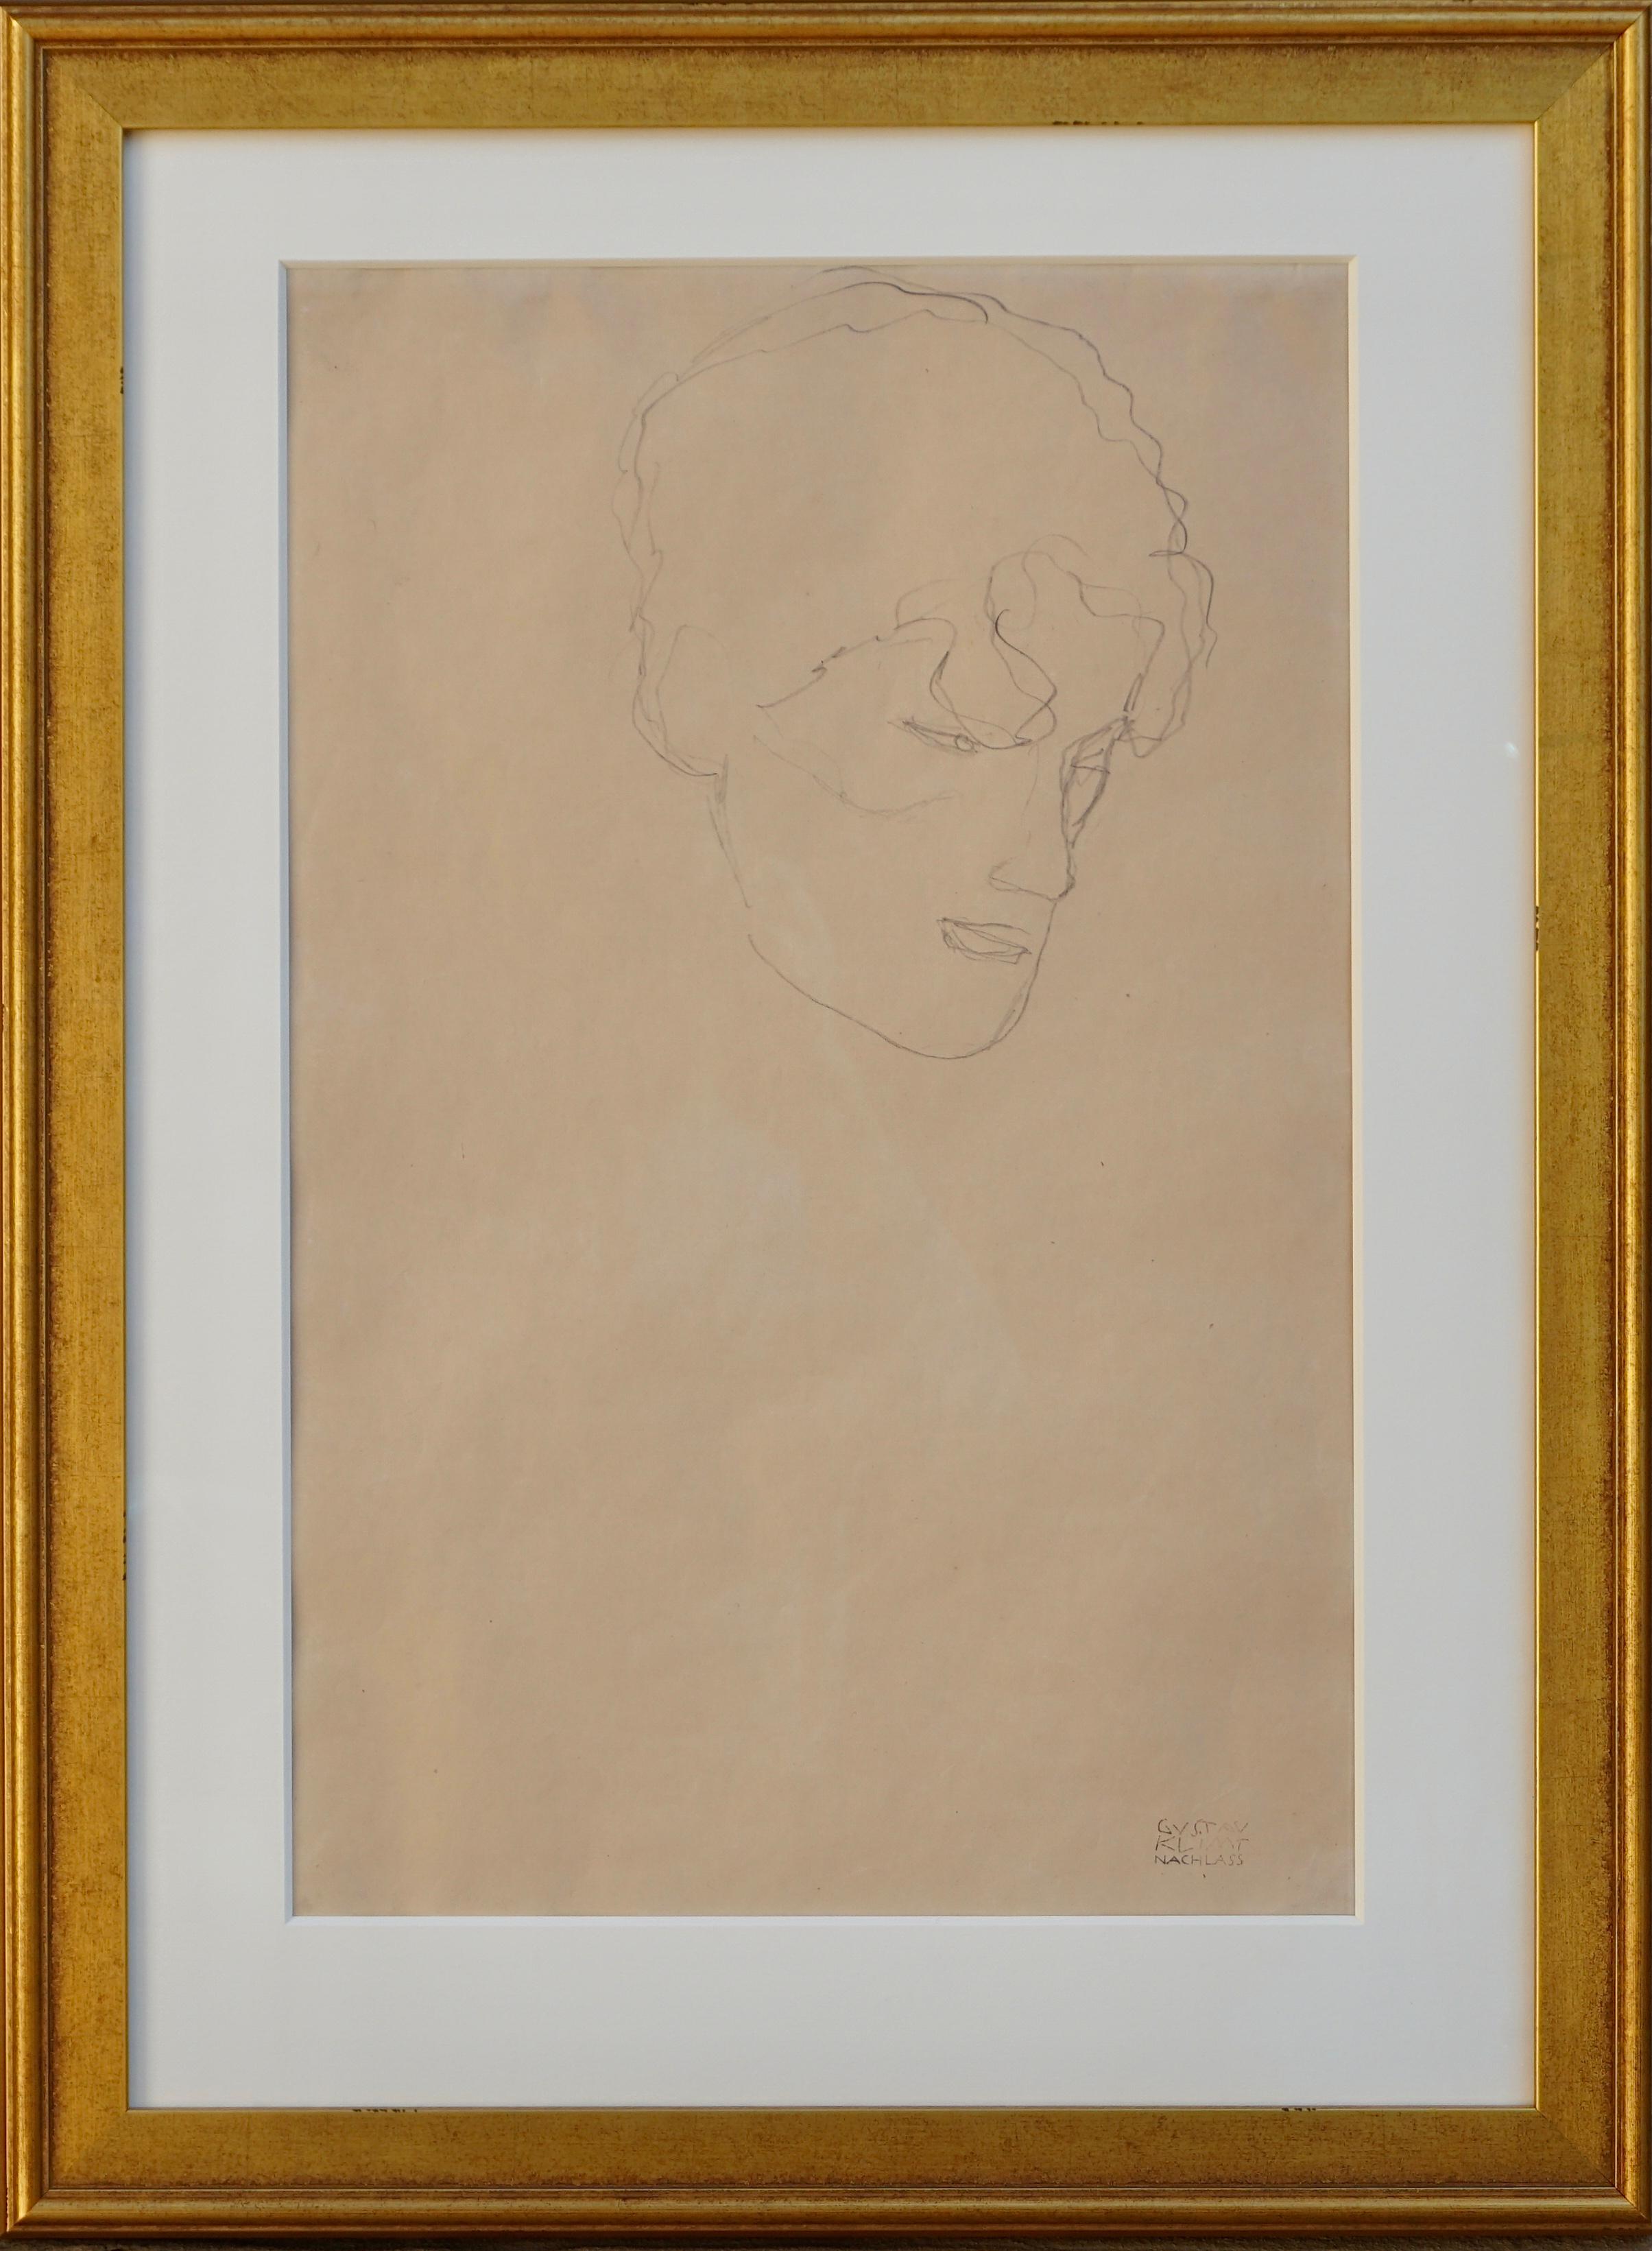 Gustav Klimt (Austrian, 1862-1918)
Frauenkopf nach rechts, 1916
Pencil on paper
Dimensions: 22.5 x 14.75 Inches (57.2 x 37.5 cm) (sheet)
Stamped lower right: GUSTAV / KLIMT / NACHLASS
A rare opportunity to own a Gustav Klimt